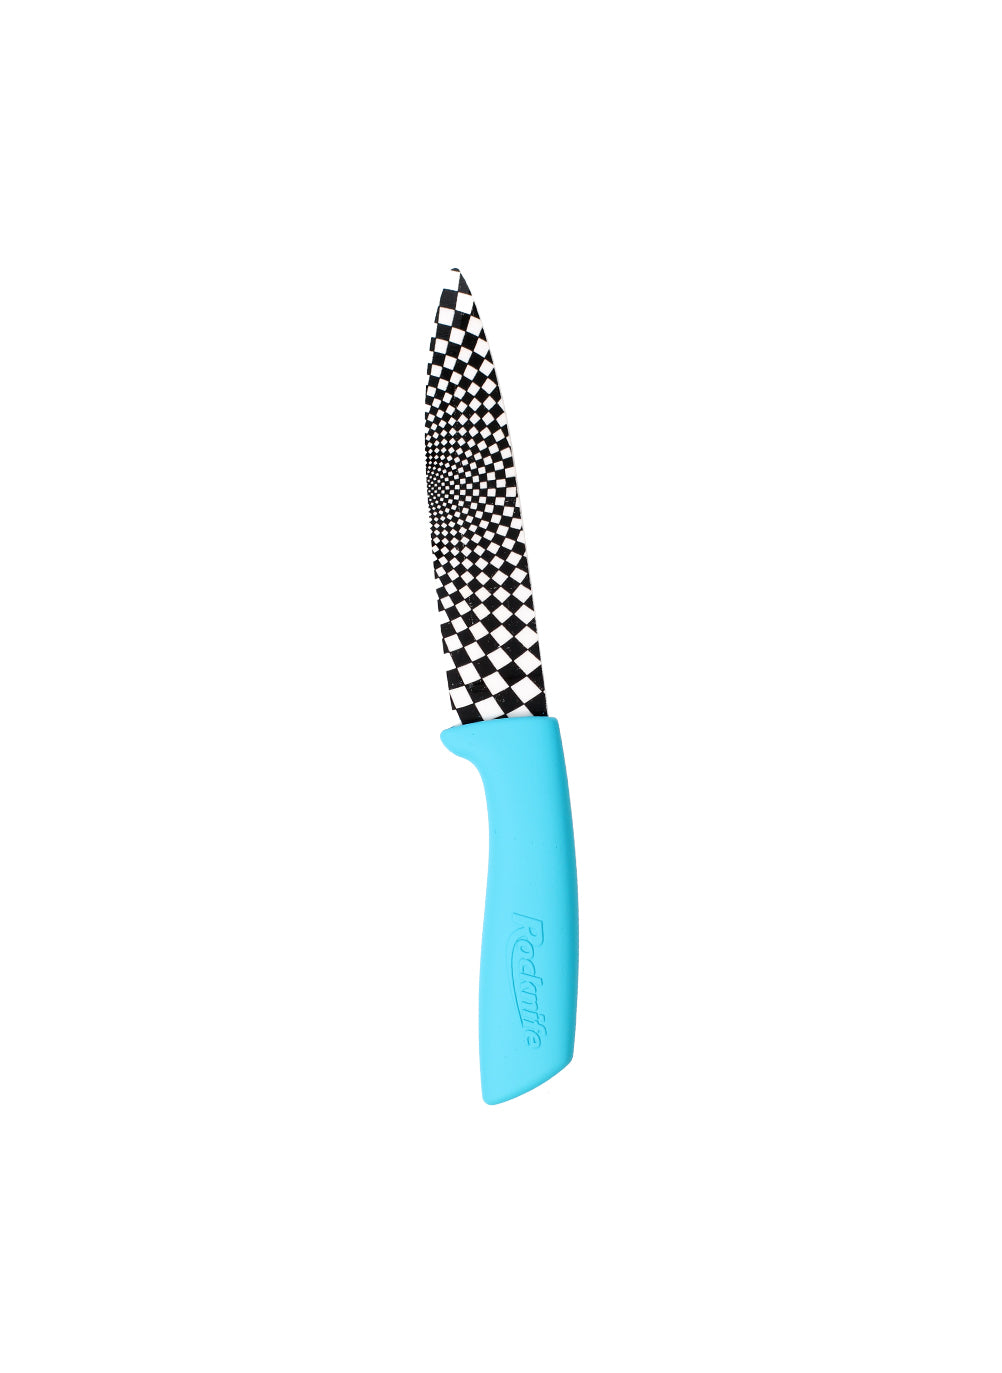 4 Inch Ceramic Kitchen Knife - Blue